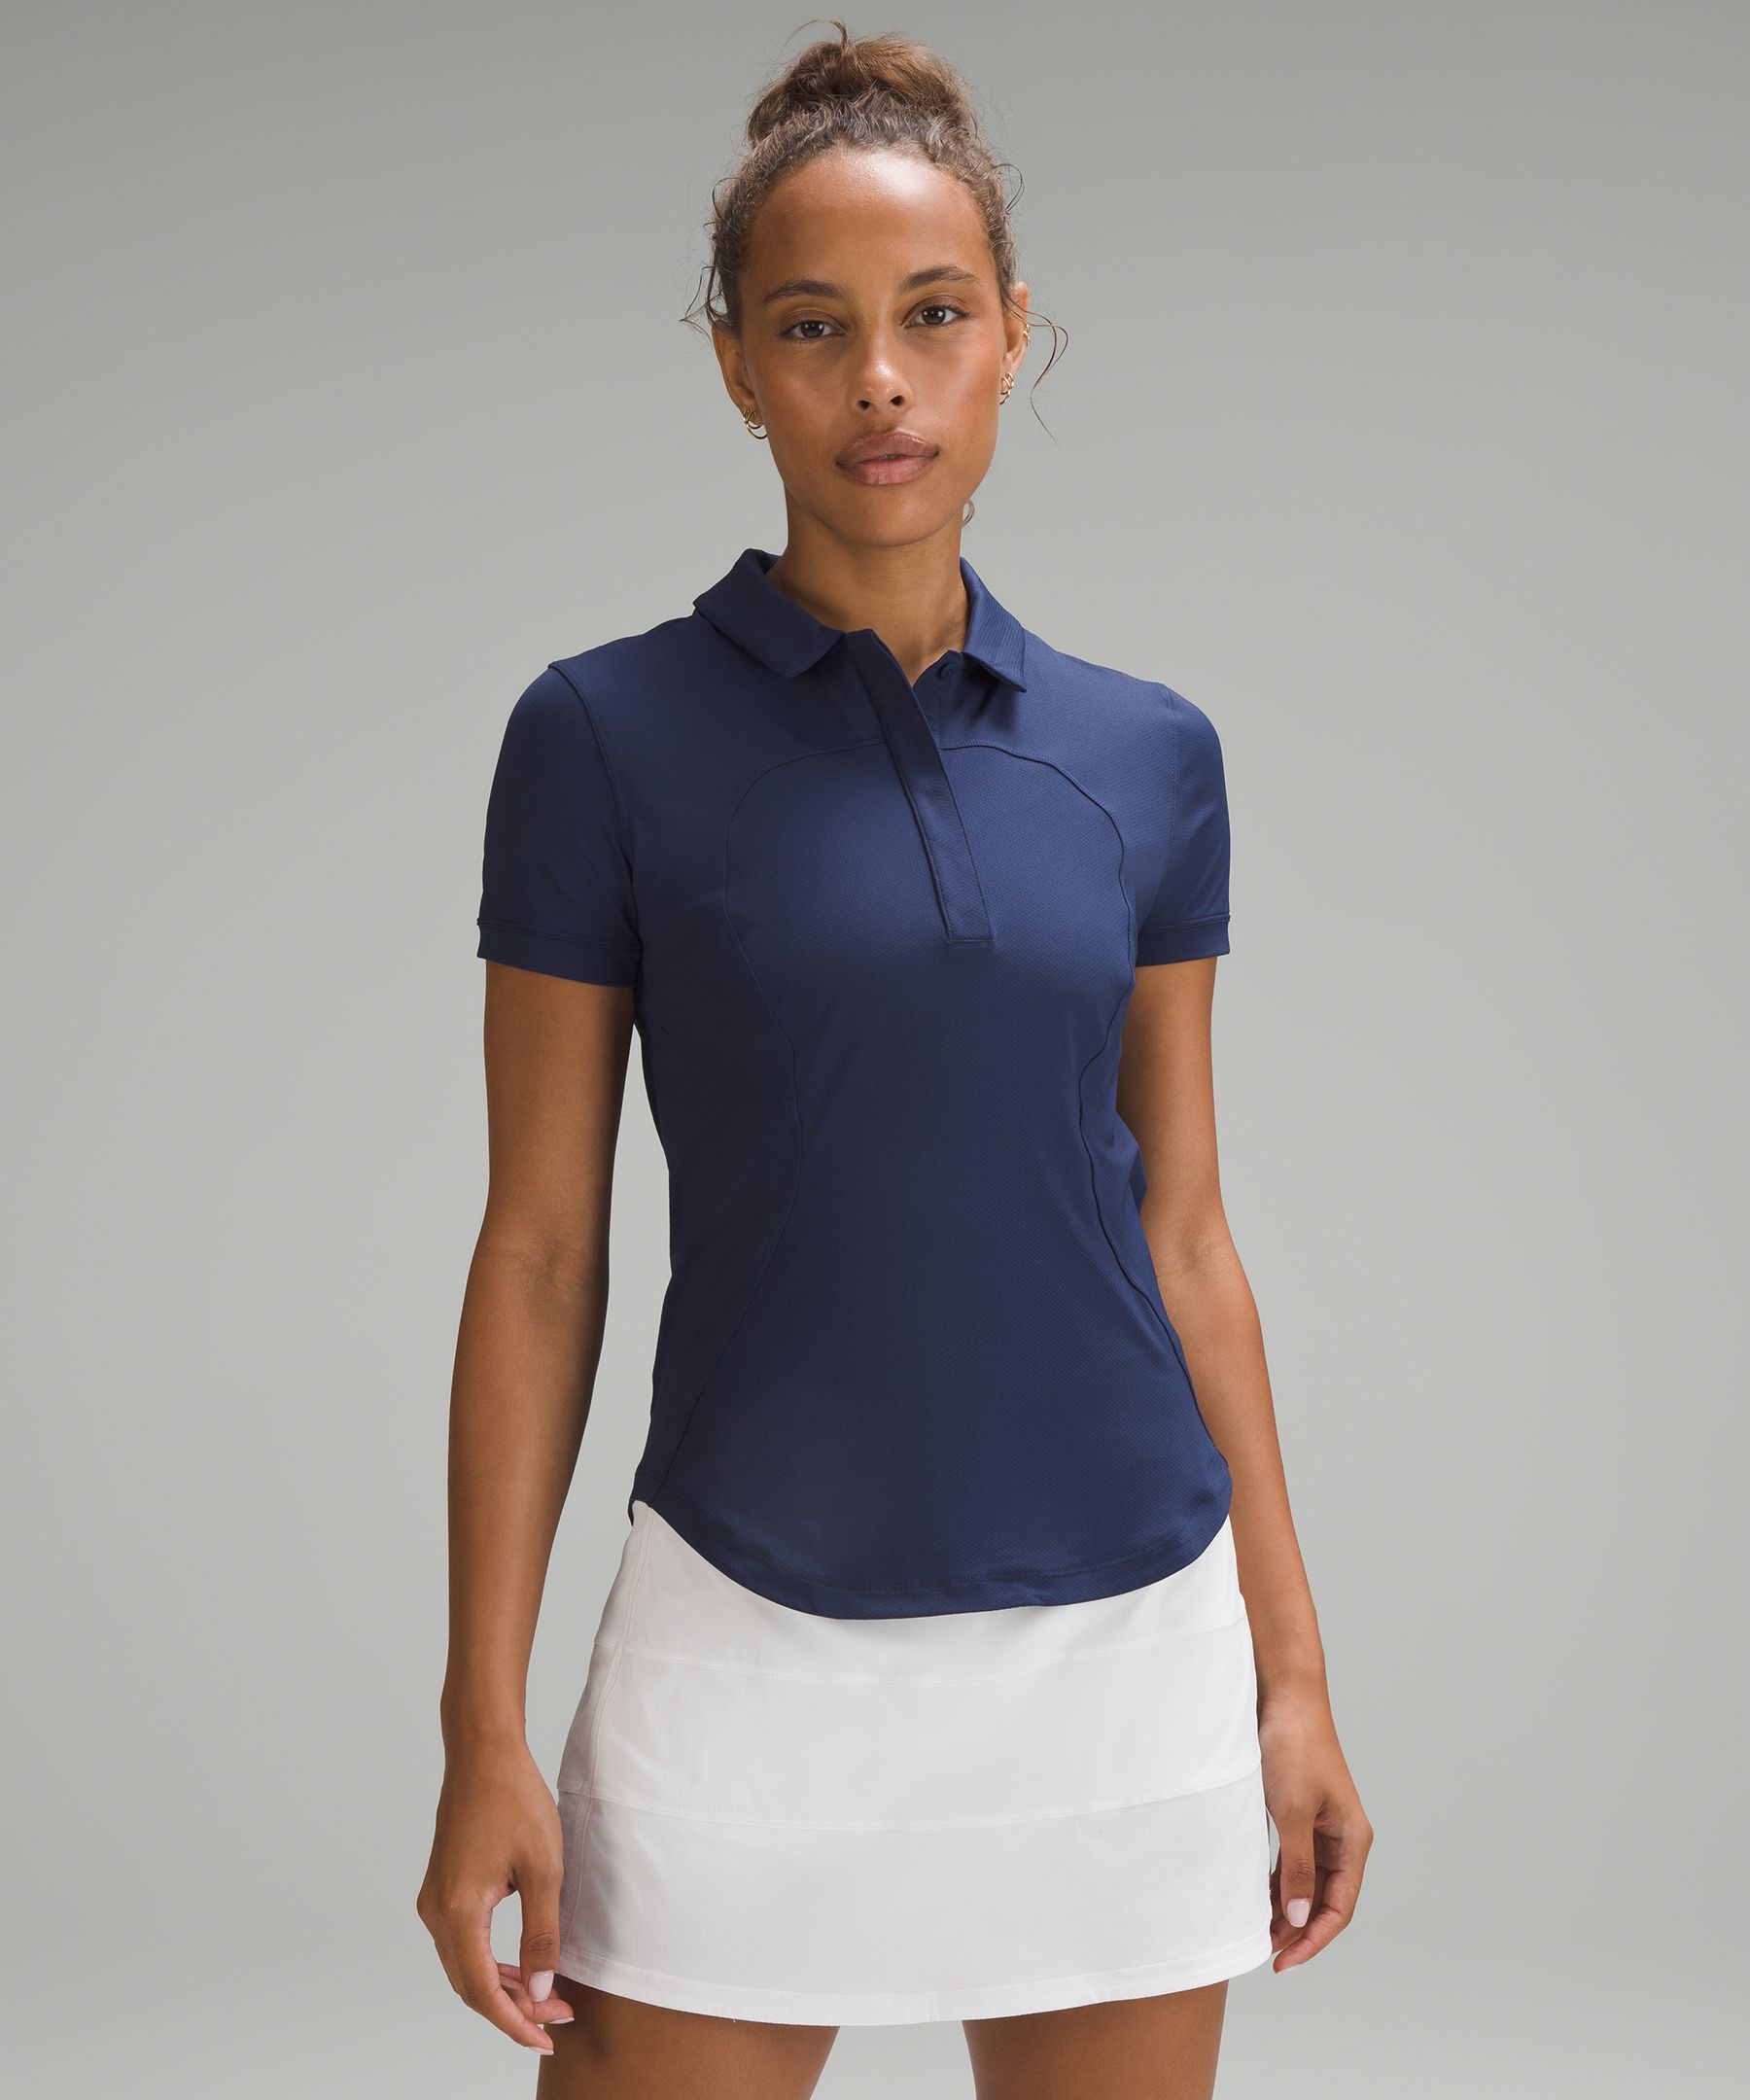 short sleeve polo women, high sale 78% off - www.inidesignstudio.com